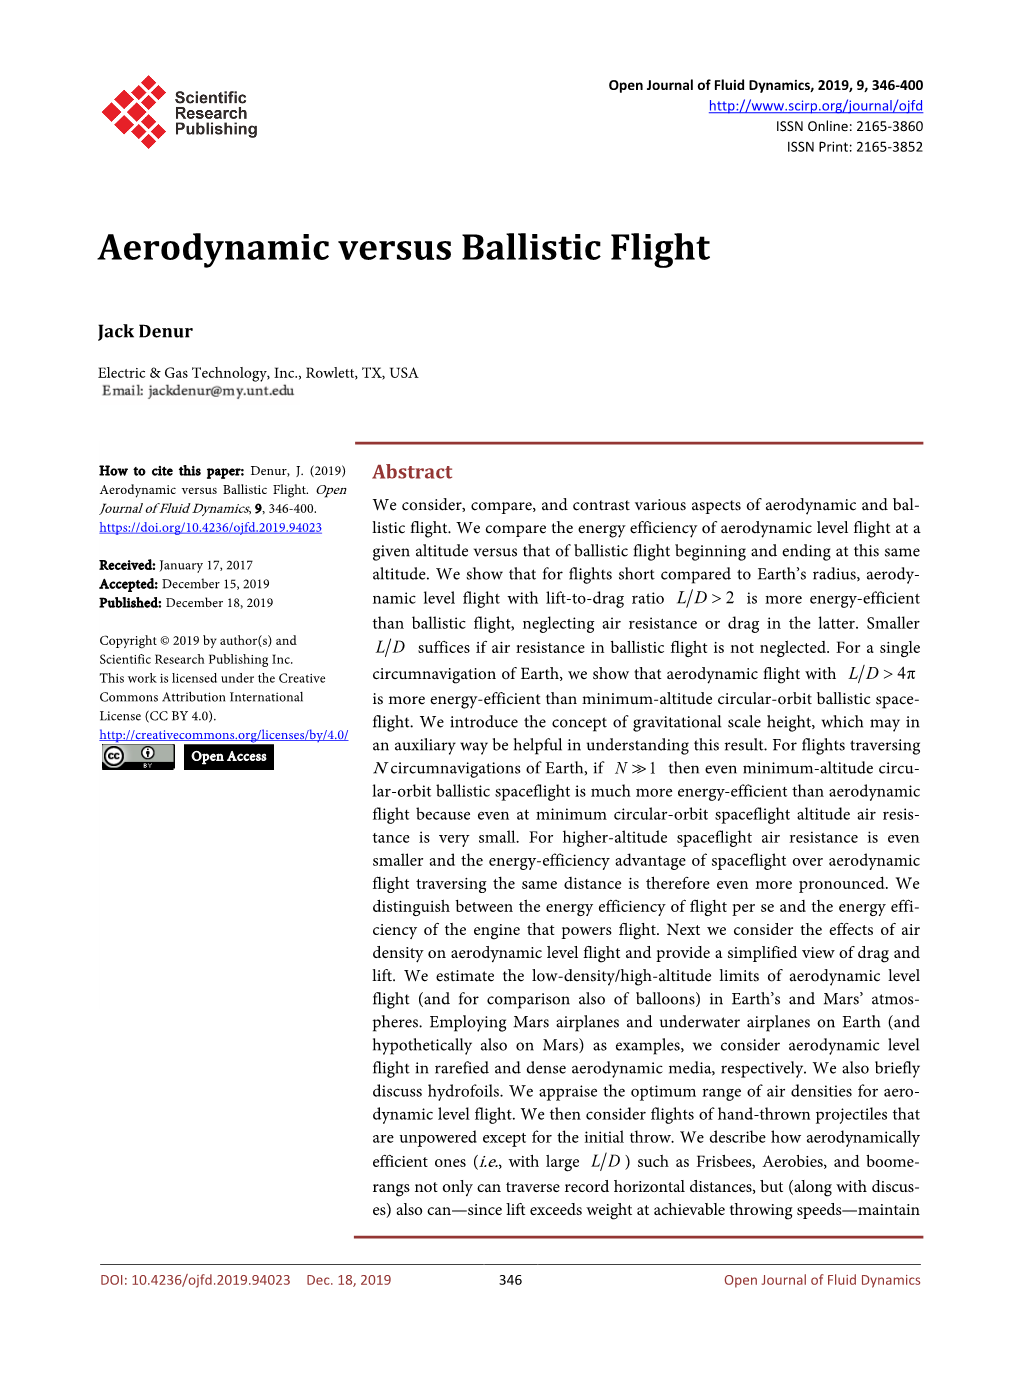 Aerodynamic Versus Ballistic Flight